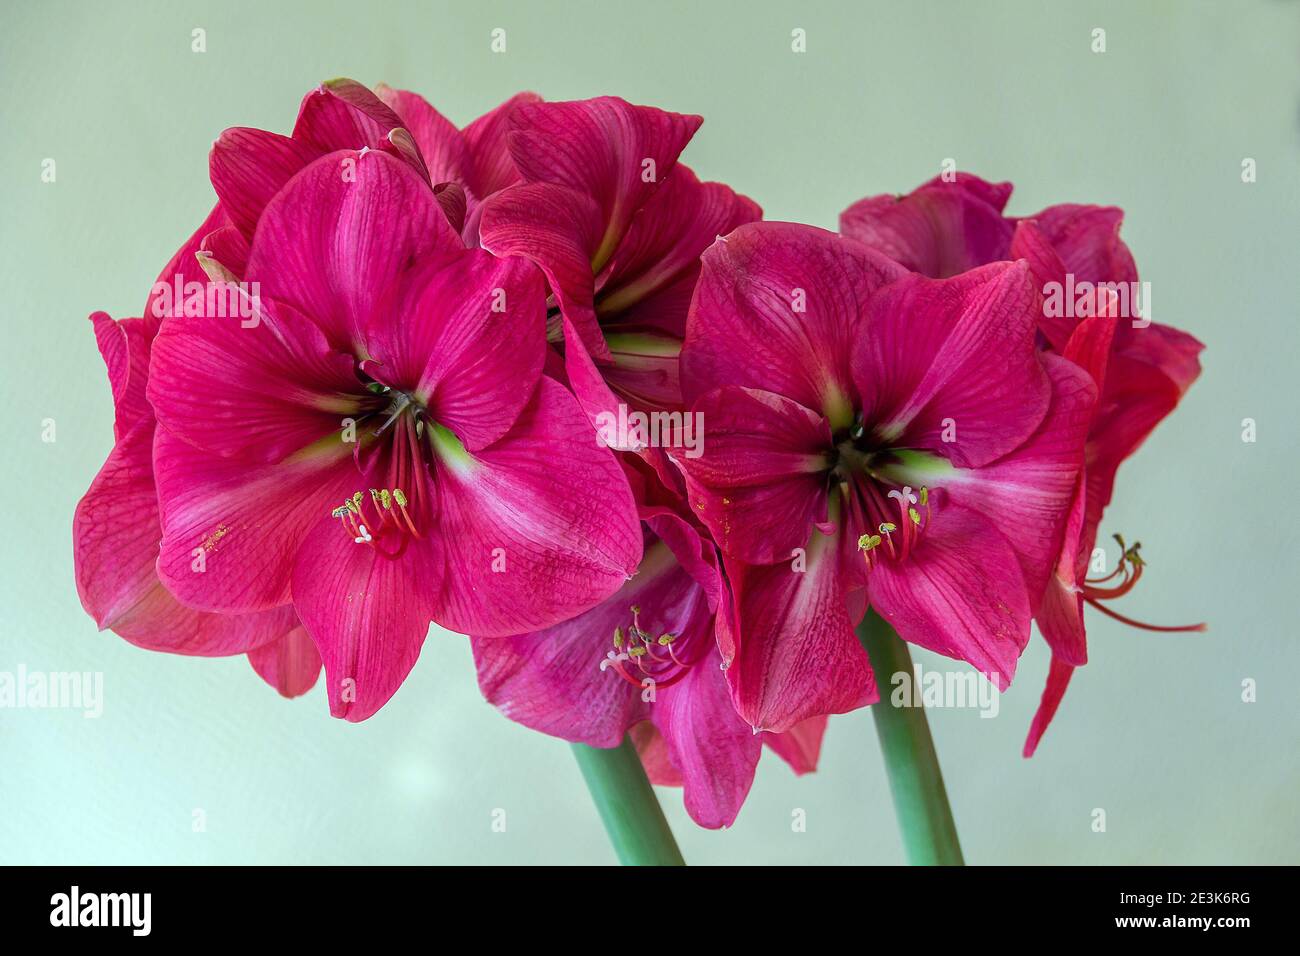 Hippeastrum Amaryllis pink amaryllis flower blooming close up  Stock Photo